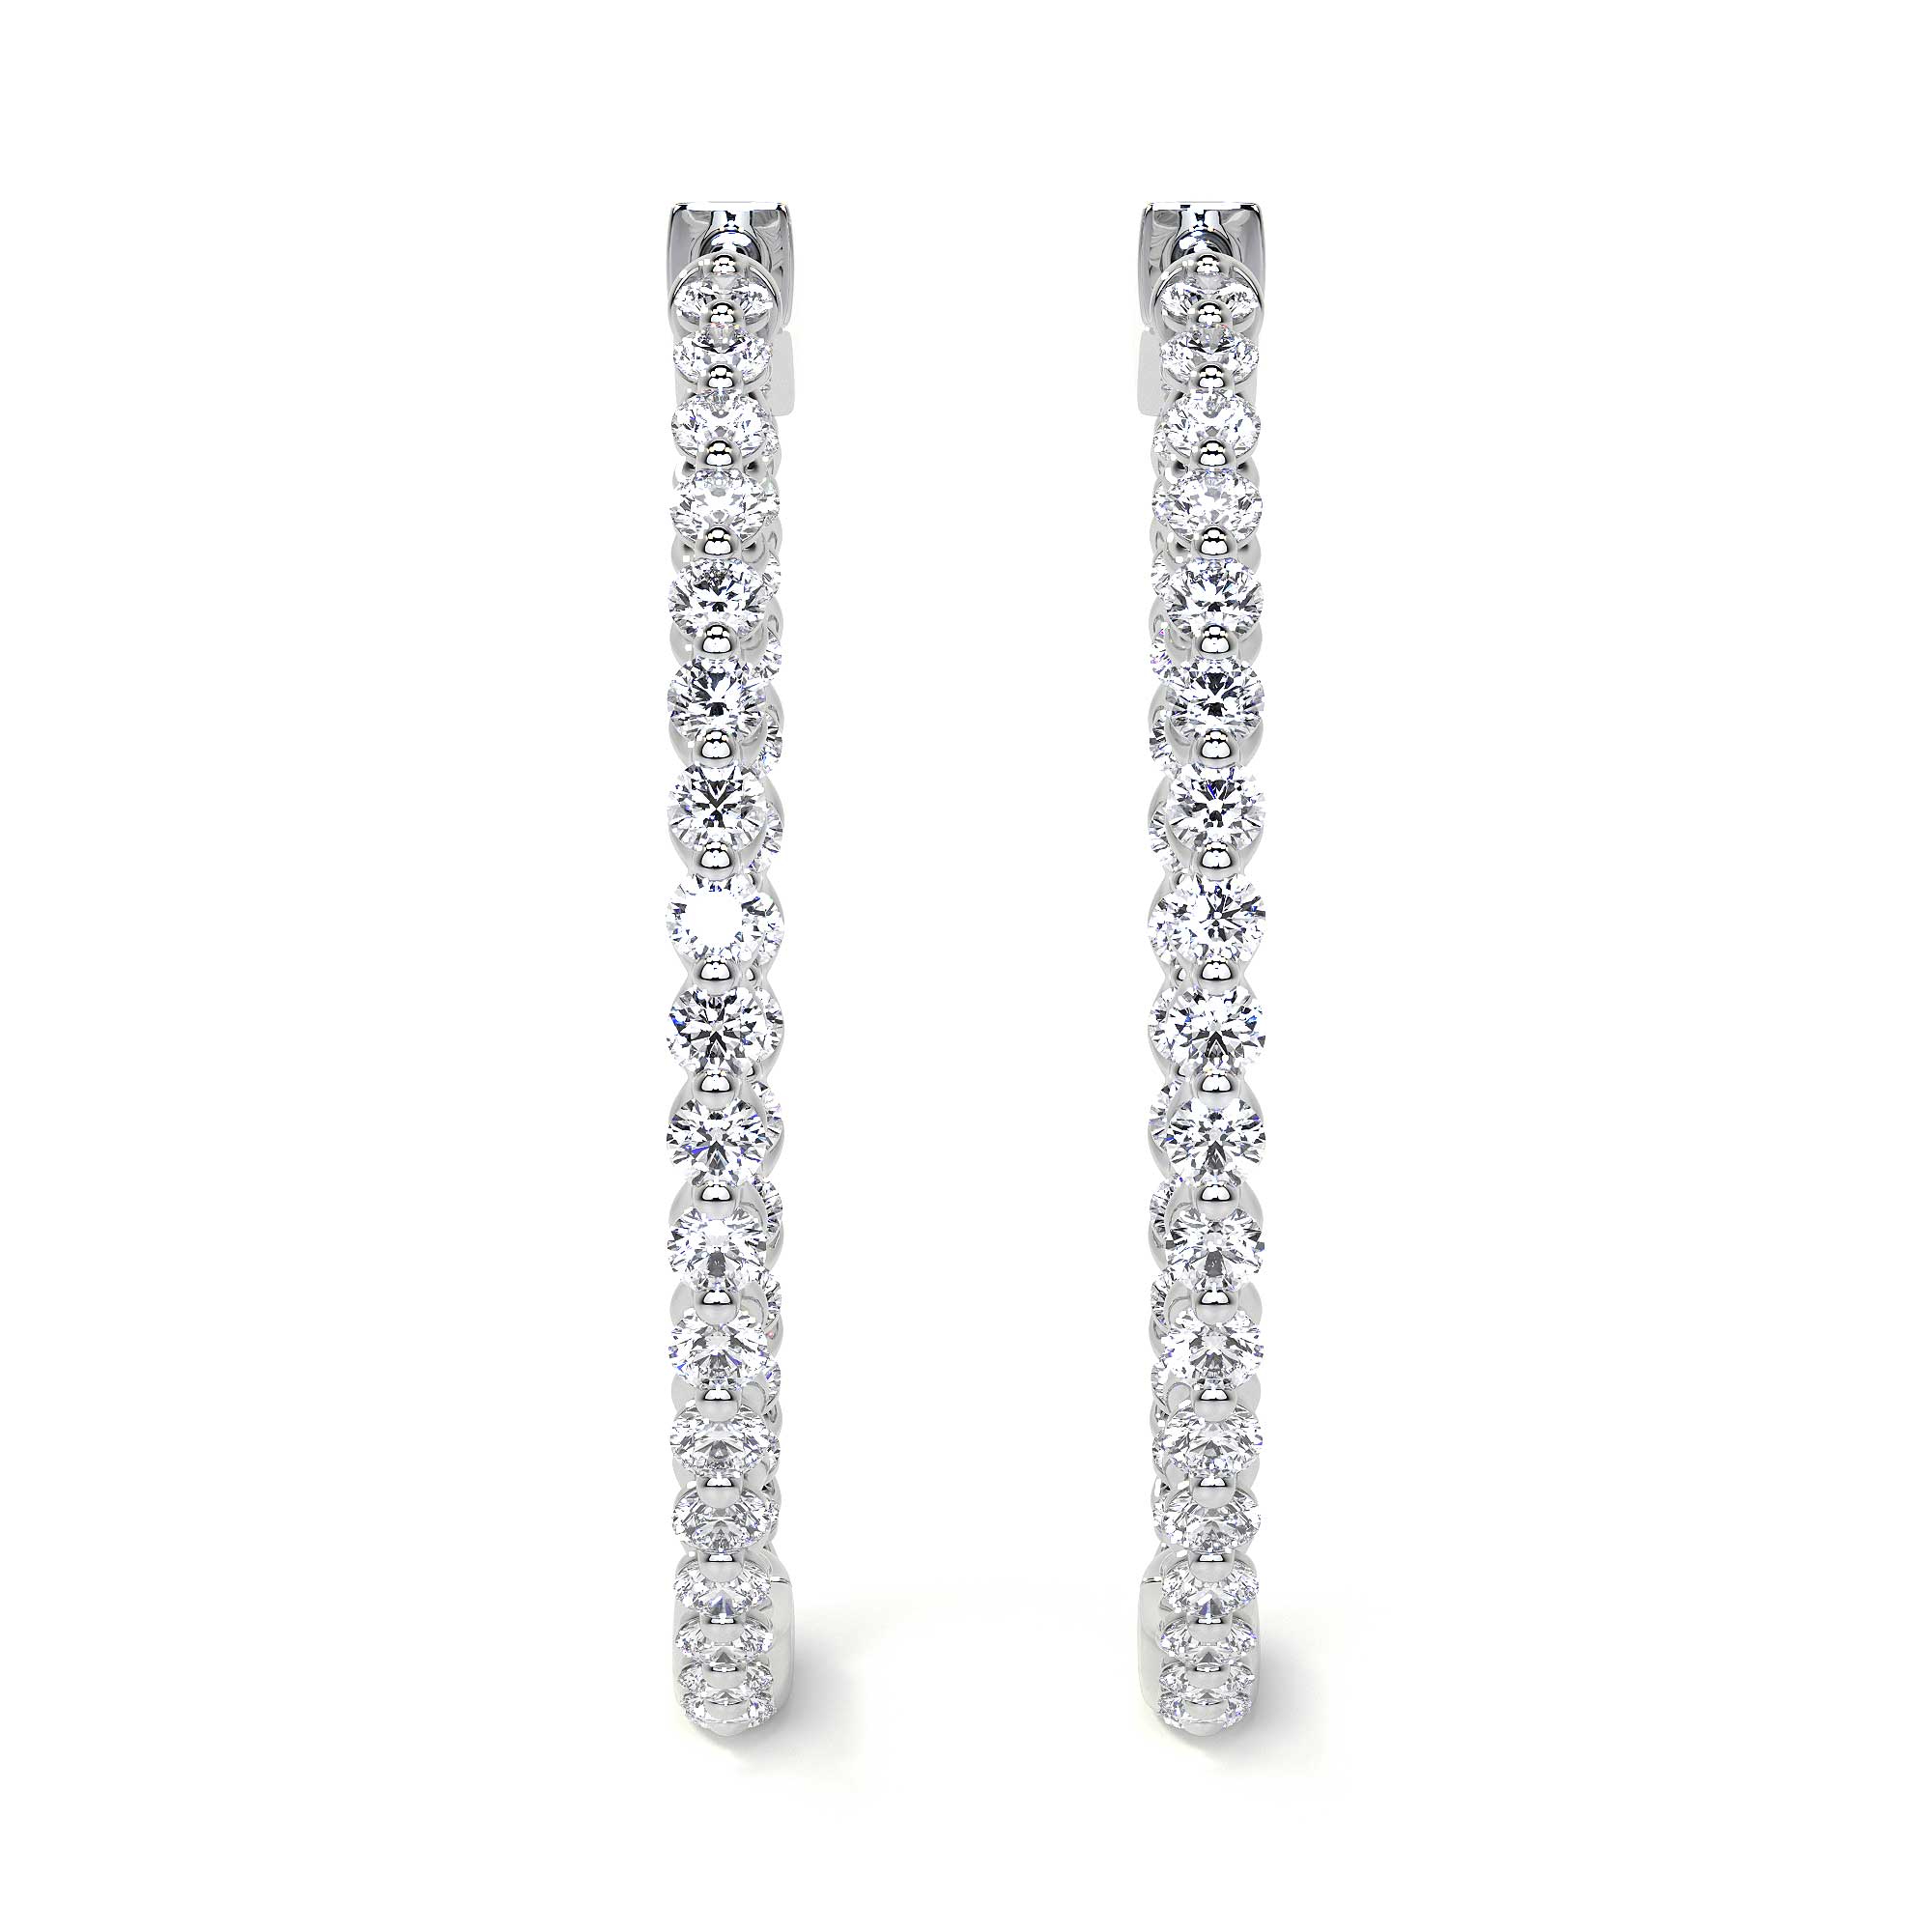 Inside Out Large Diamond Hoops - Earrings - Leviev Diamonds